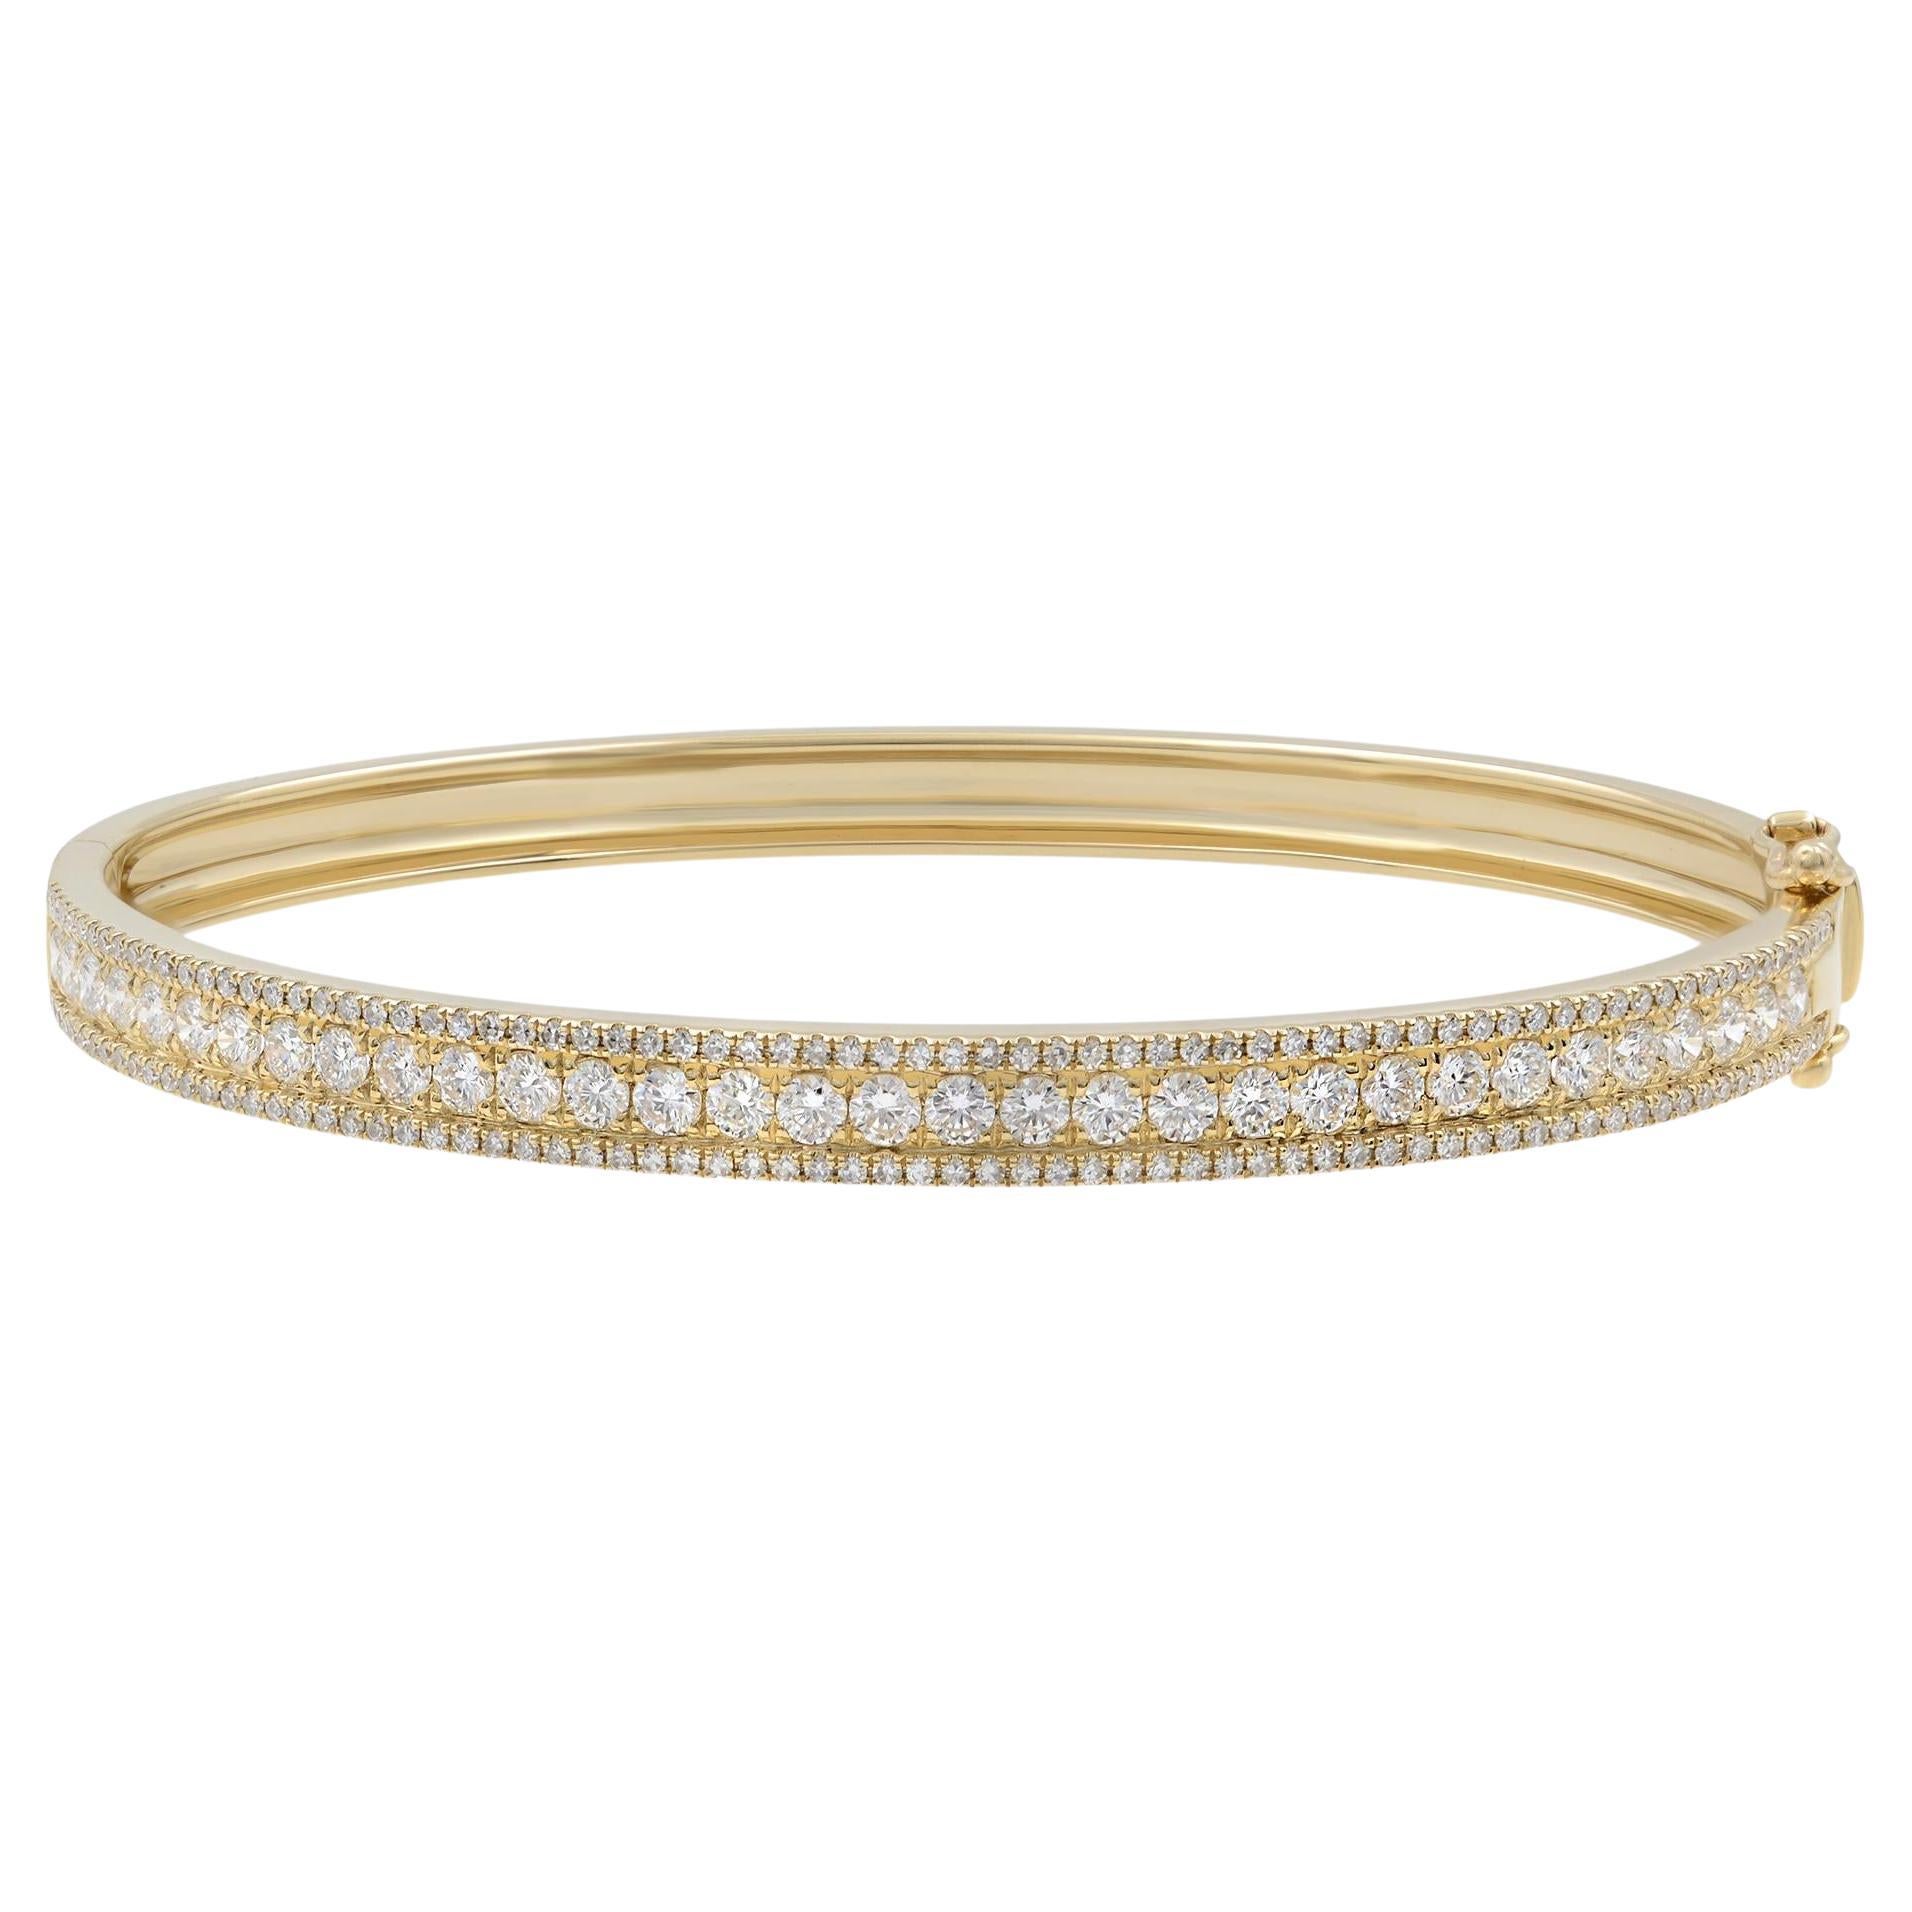 Rachel Koen Round Cut Diamond Bangle Bracelet 14K Yellow Gold 1.70Cttw For Sale